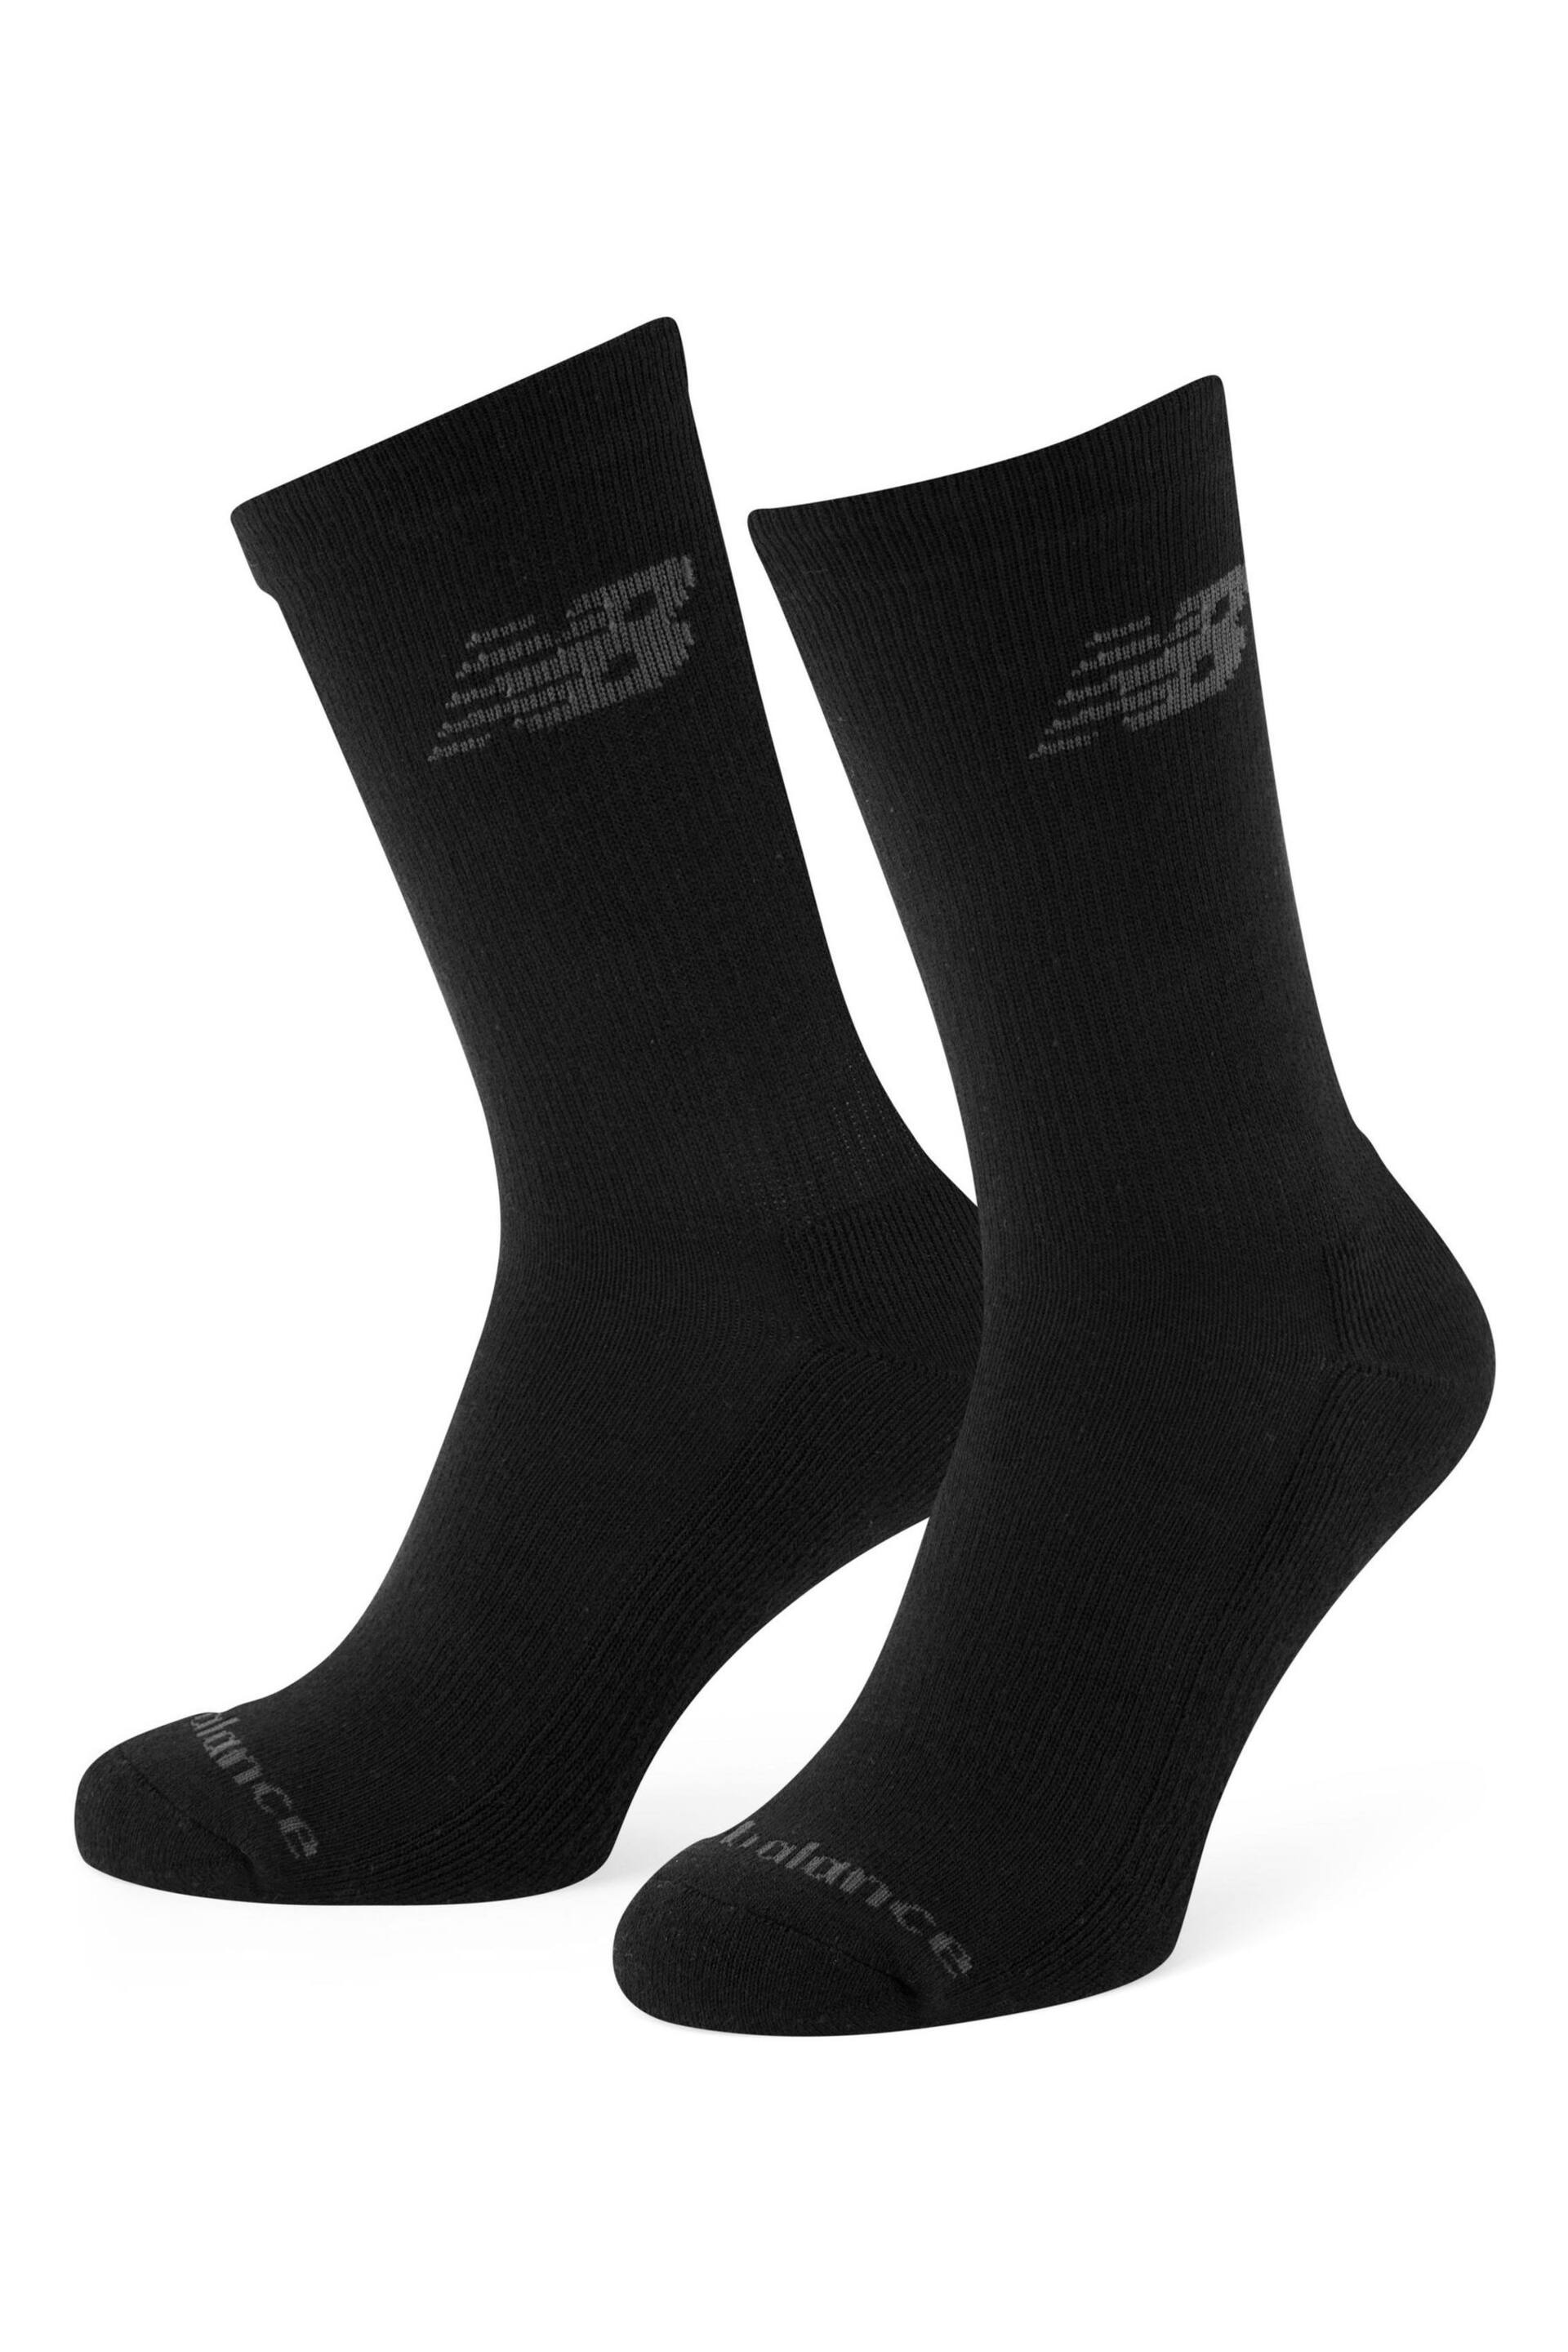 New Balance Black Multipack Sports Cushioned Crew Socks - Image 2 of 3